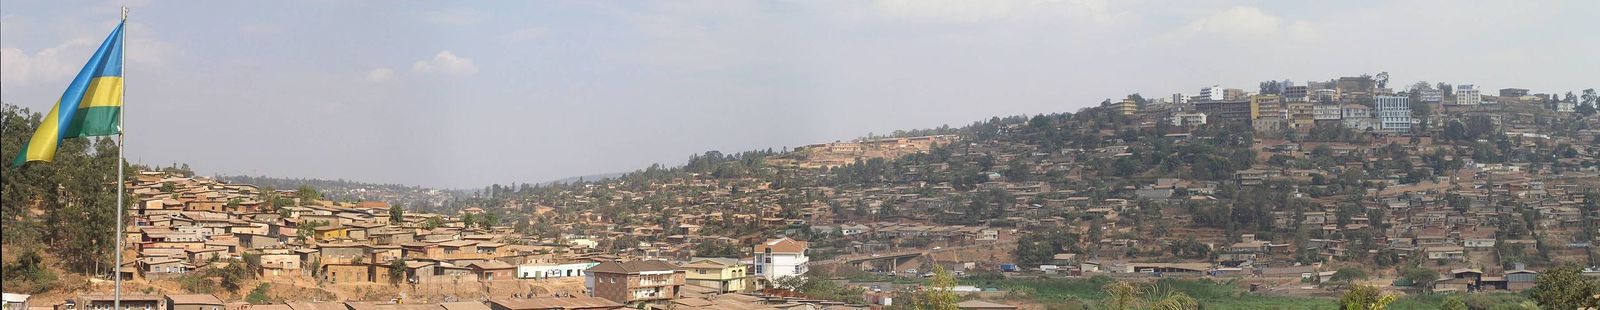 Кигали, Руанда фото #22822